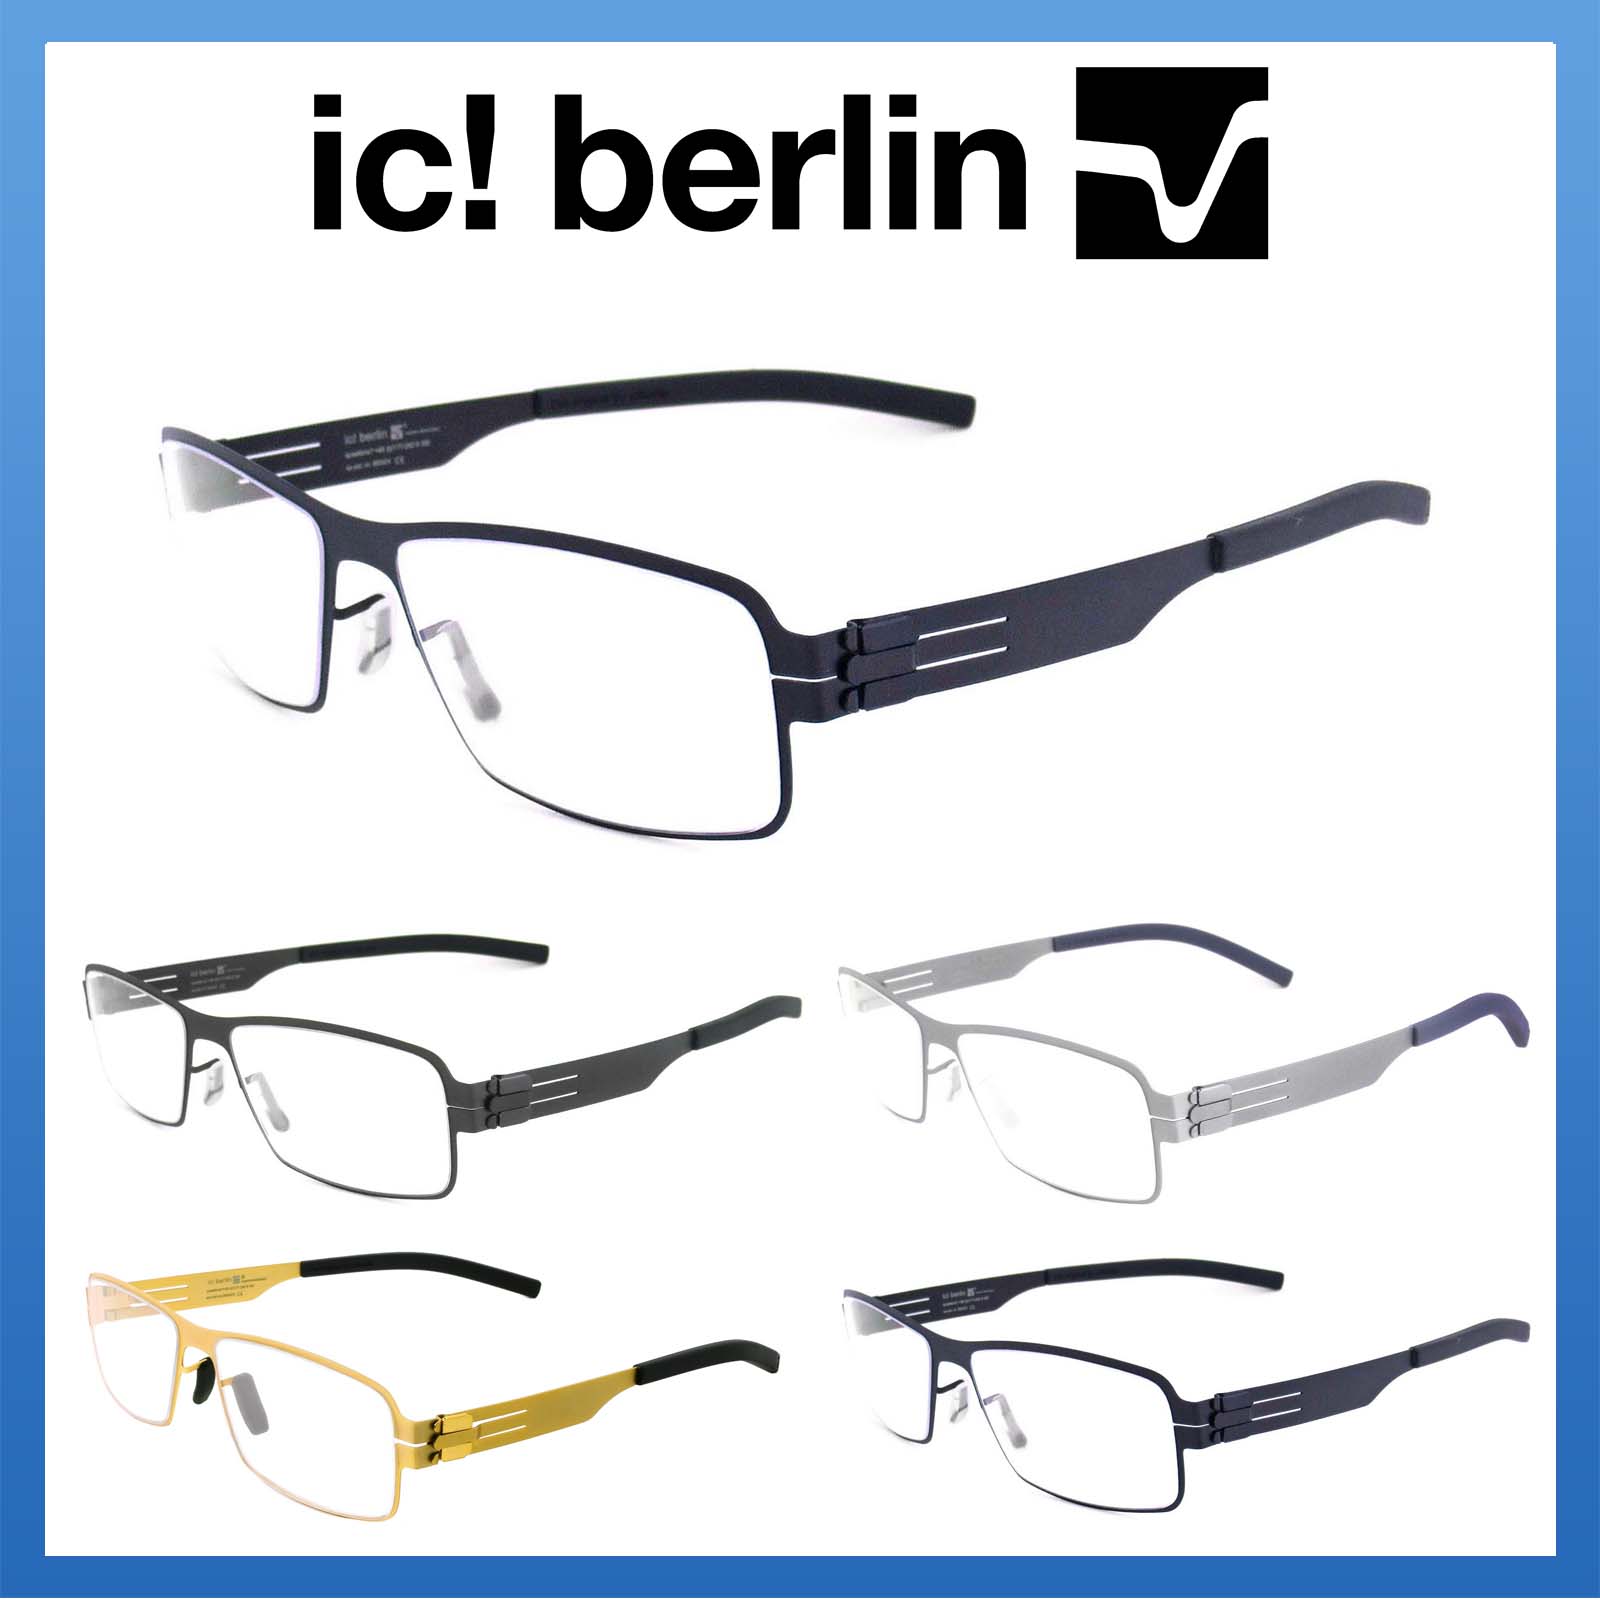 Ic Berlin แว่นตารุ่น 021 กรอบเต็ม Rectangle ทรงสี่เหลี่ยมผืนผ้า ขาข้อต่อ ไม่ใช้น็อต วัสดุ สแตนเลส สตีล (สำหรับตัดเลนส์) Full frame Eyeglass leg joints Stainless Steel material Eyewear Top Glasses ทางร้านเรามีบริการรับตัดเลนส์